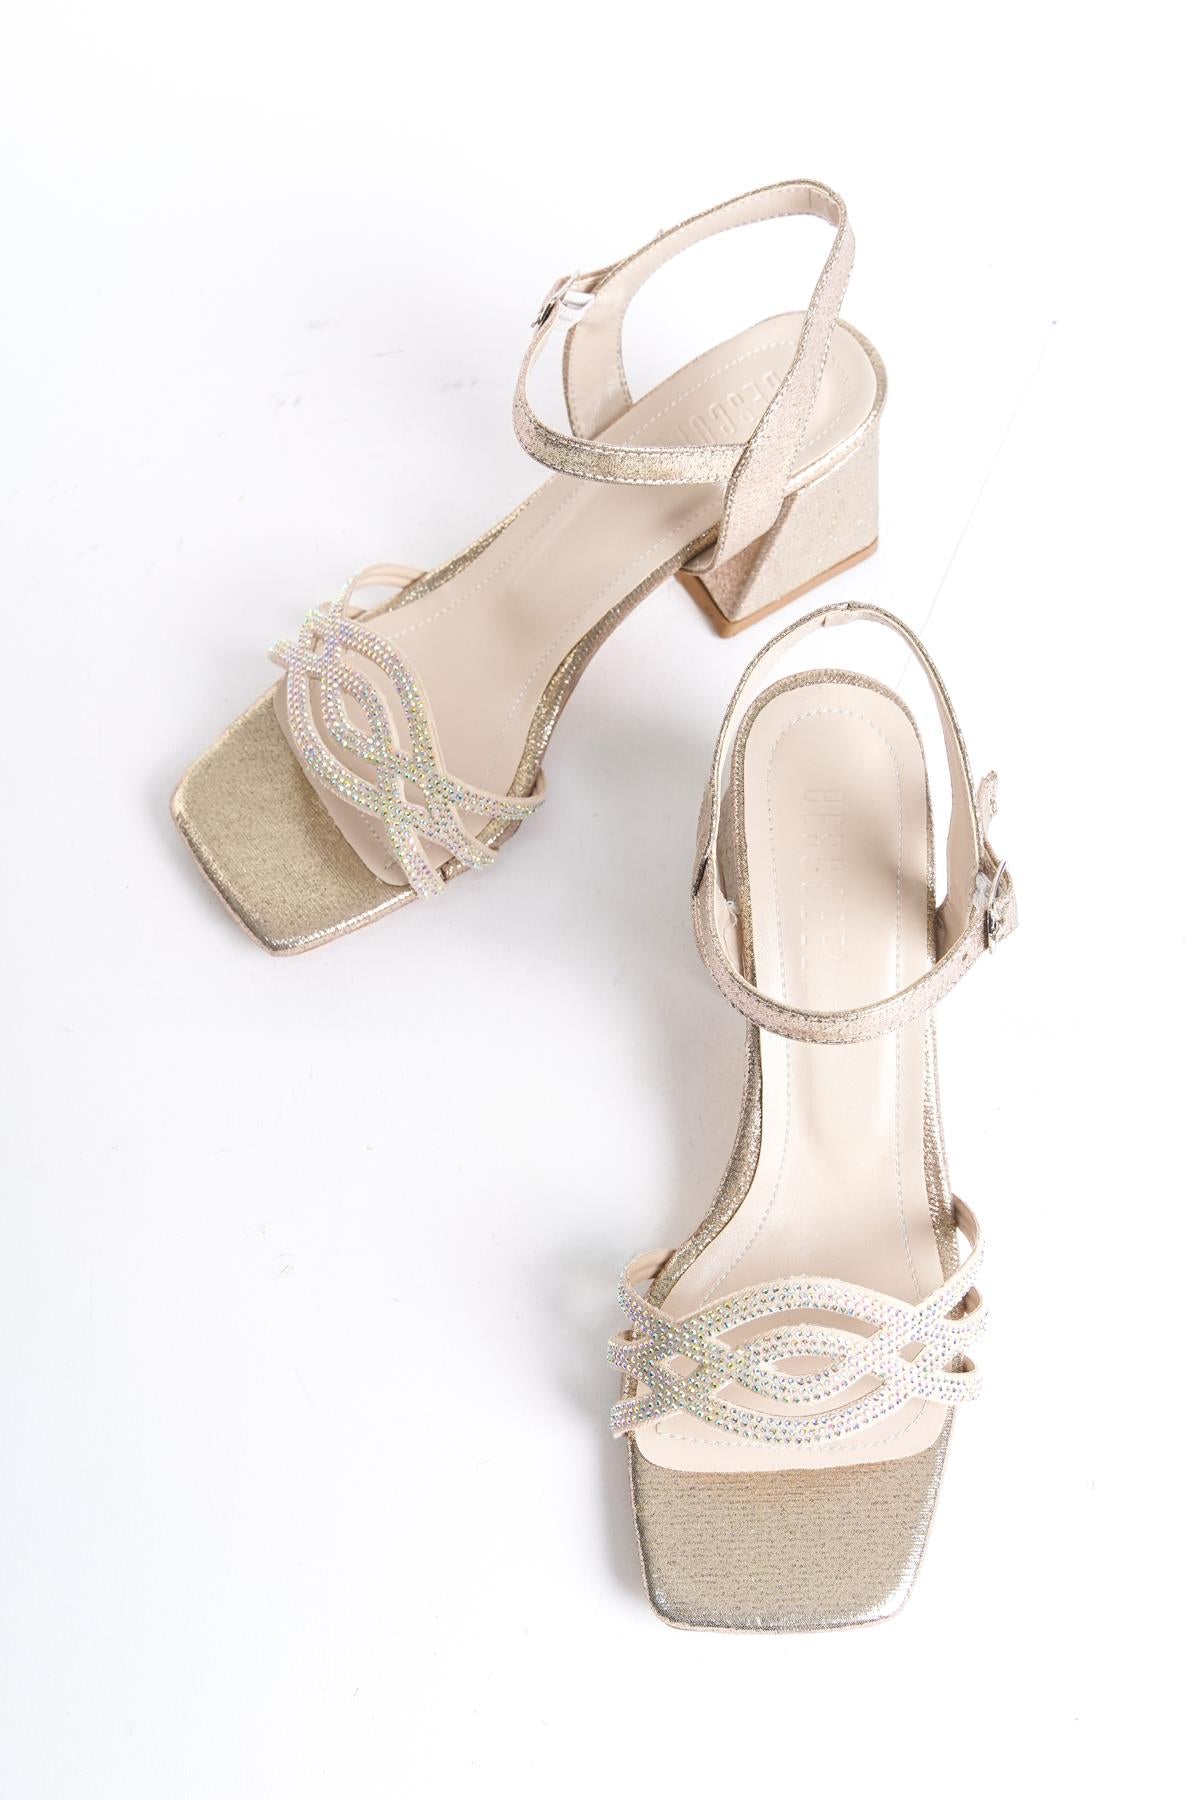 Women's Gold Yekm Low Heel Stone Evening Dress Sandals Shoes - STREETMODE™